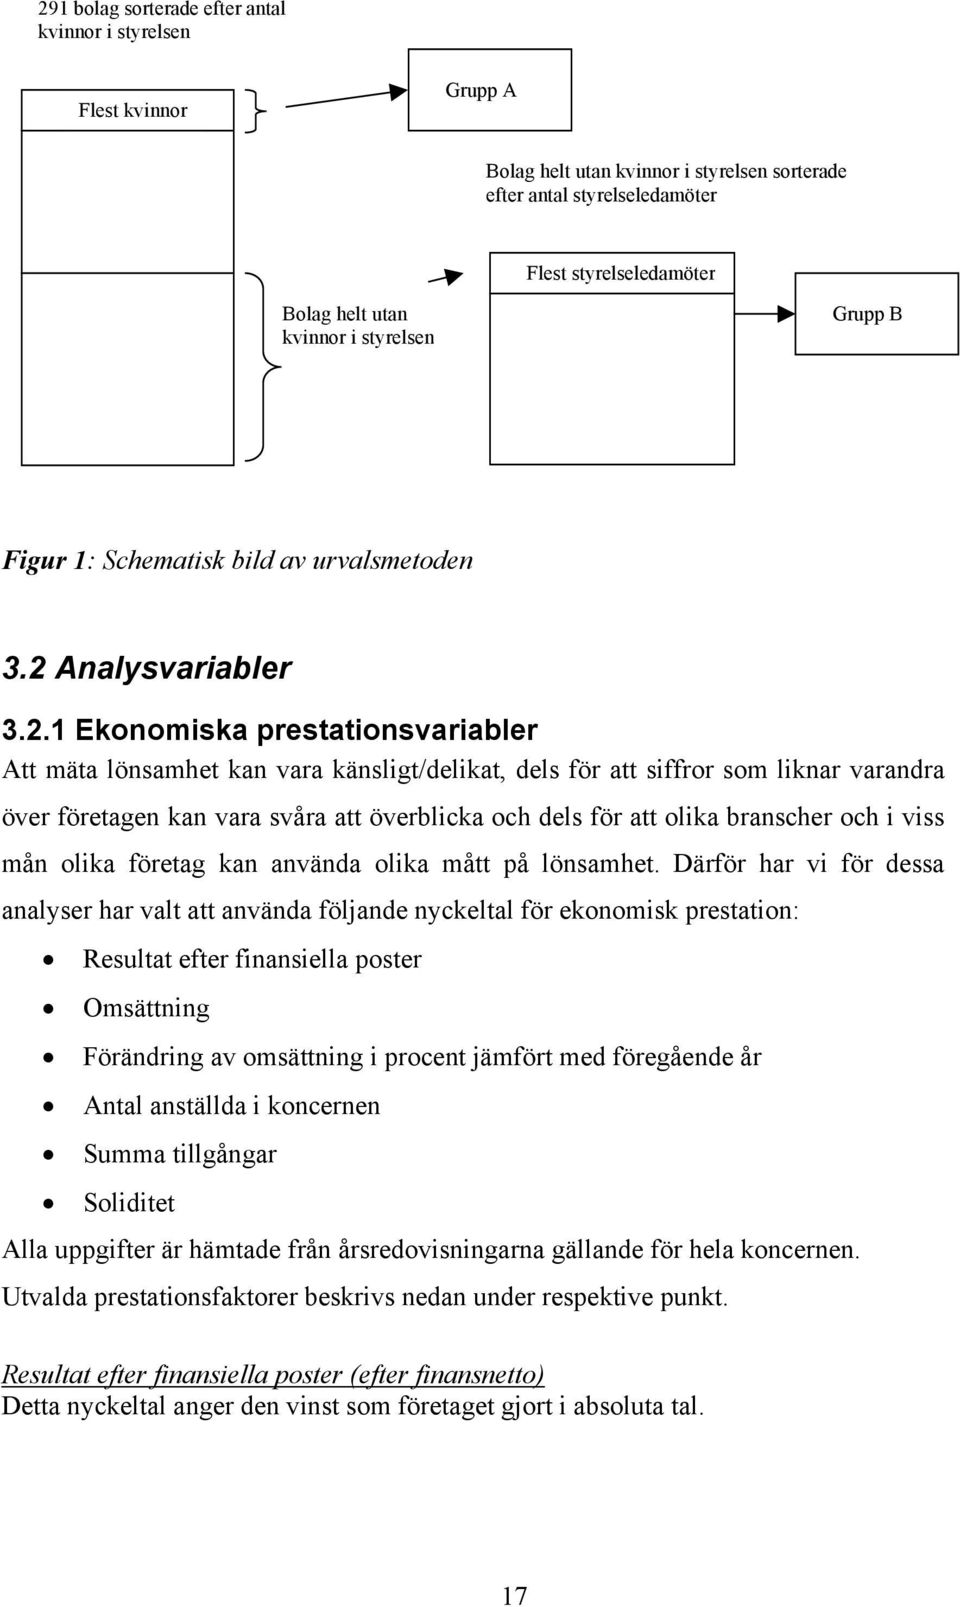 Analysvariabler 3.2.